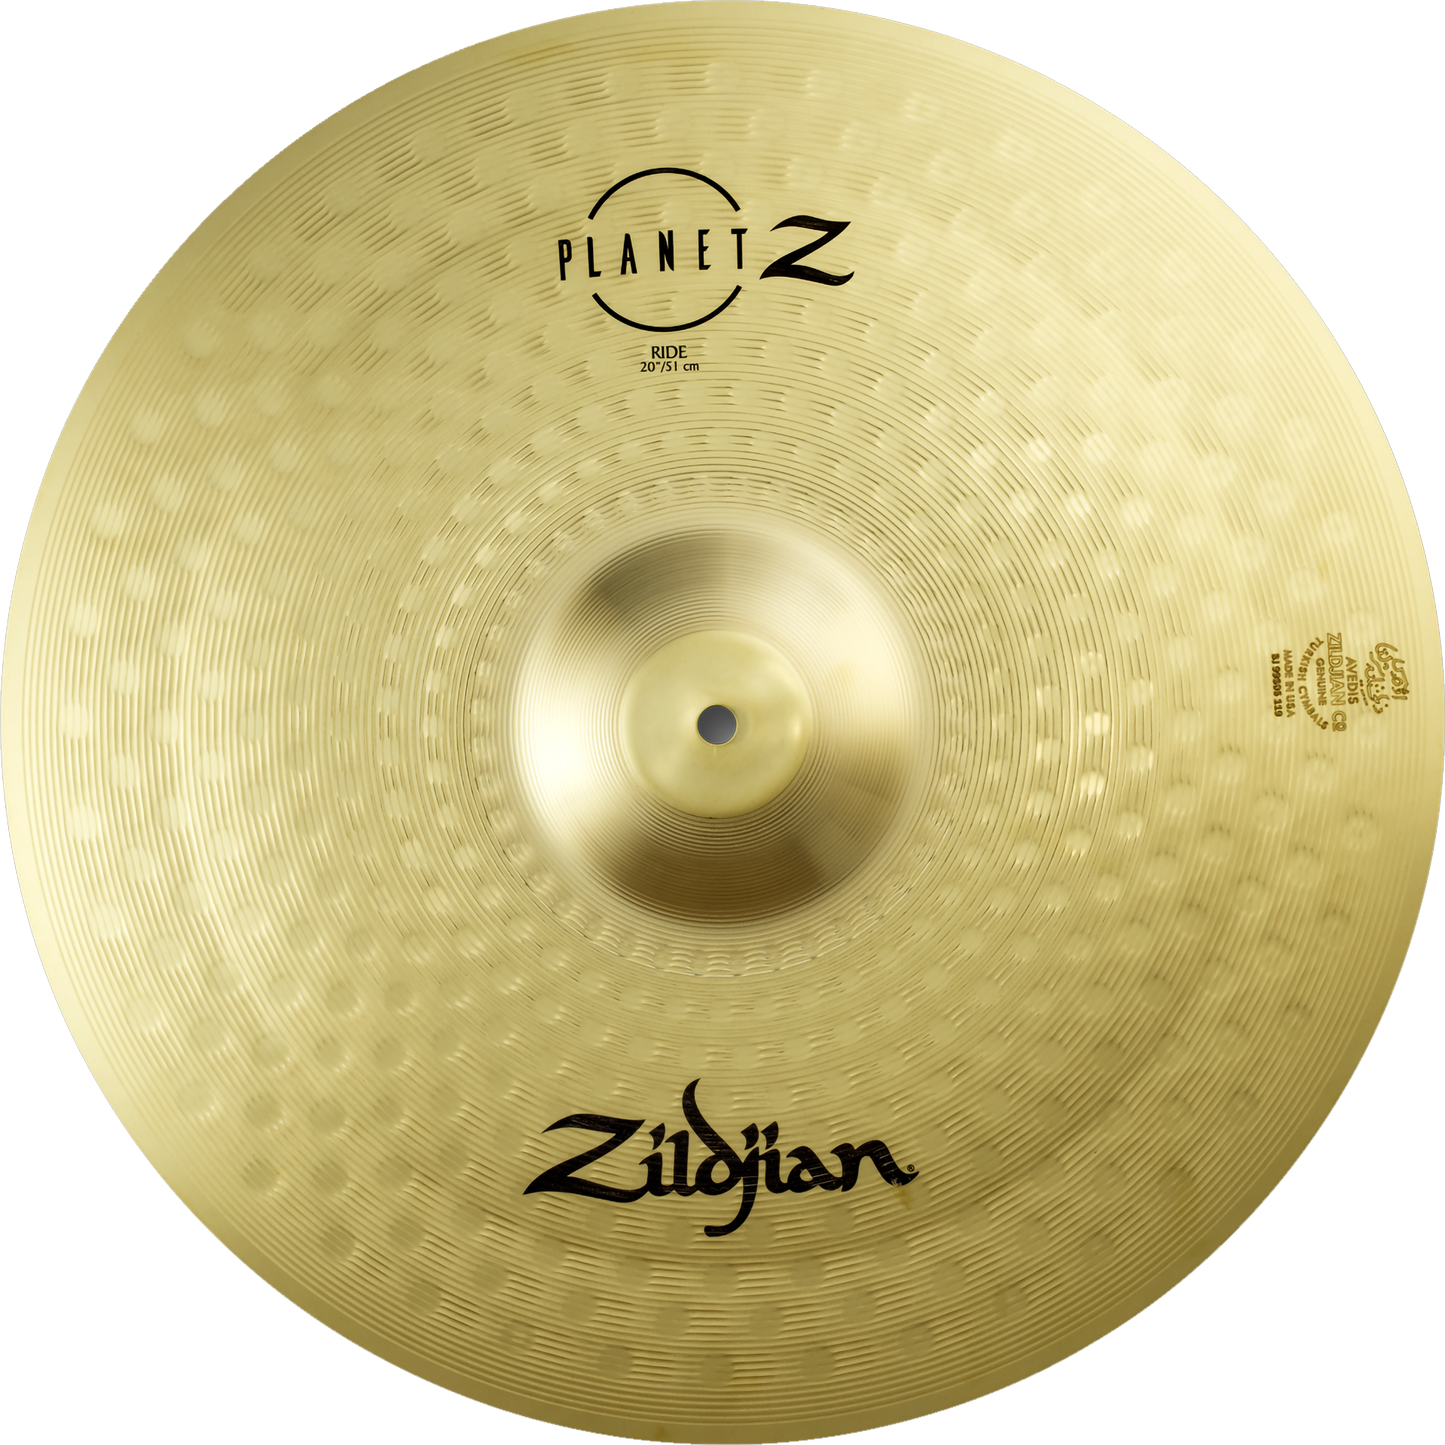 Zildjian 20” Planet Z Ride Cymbal